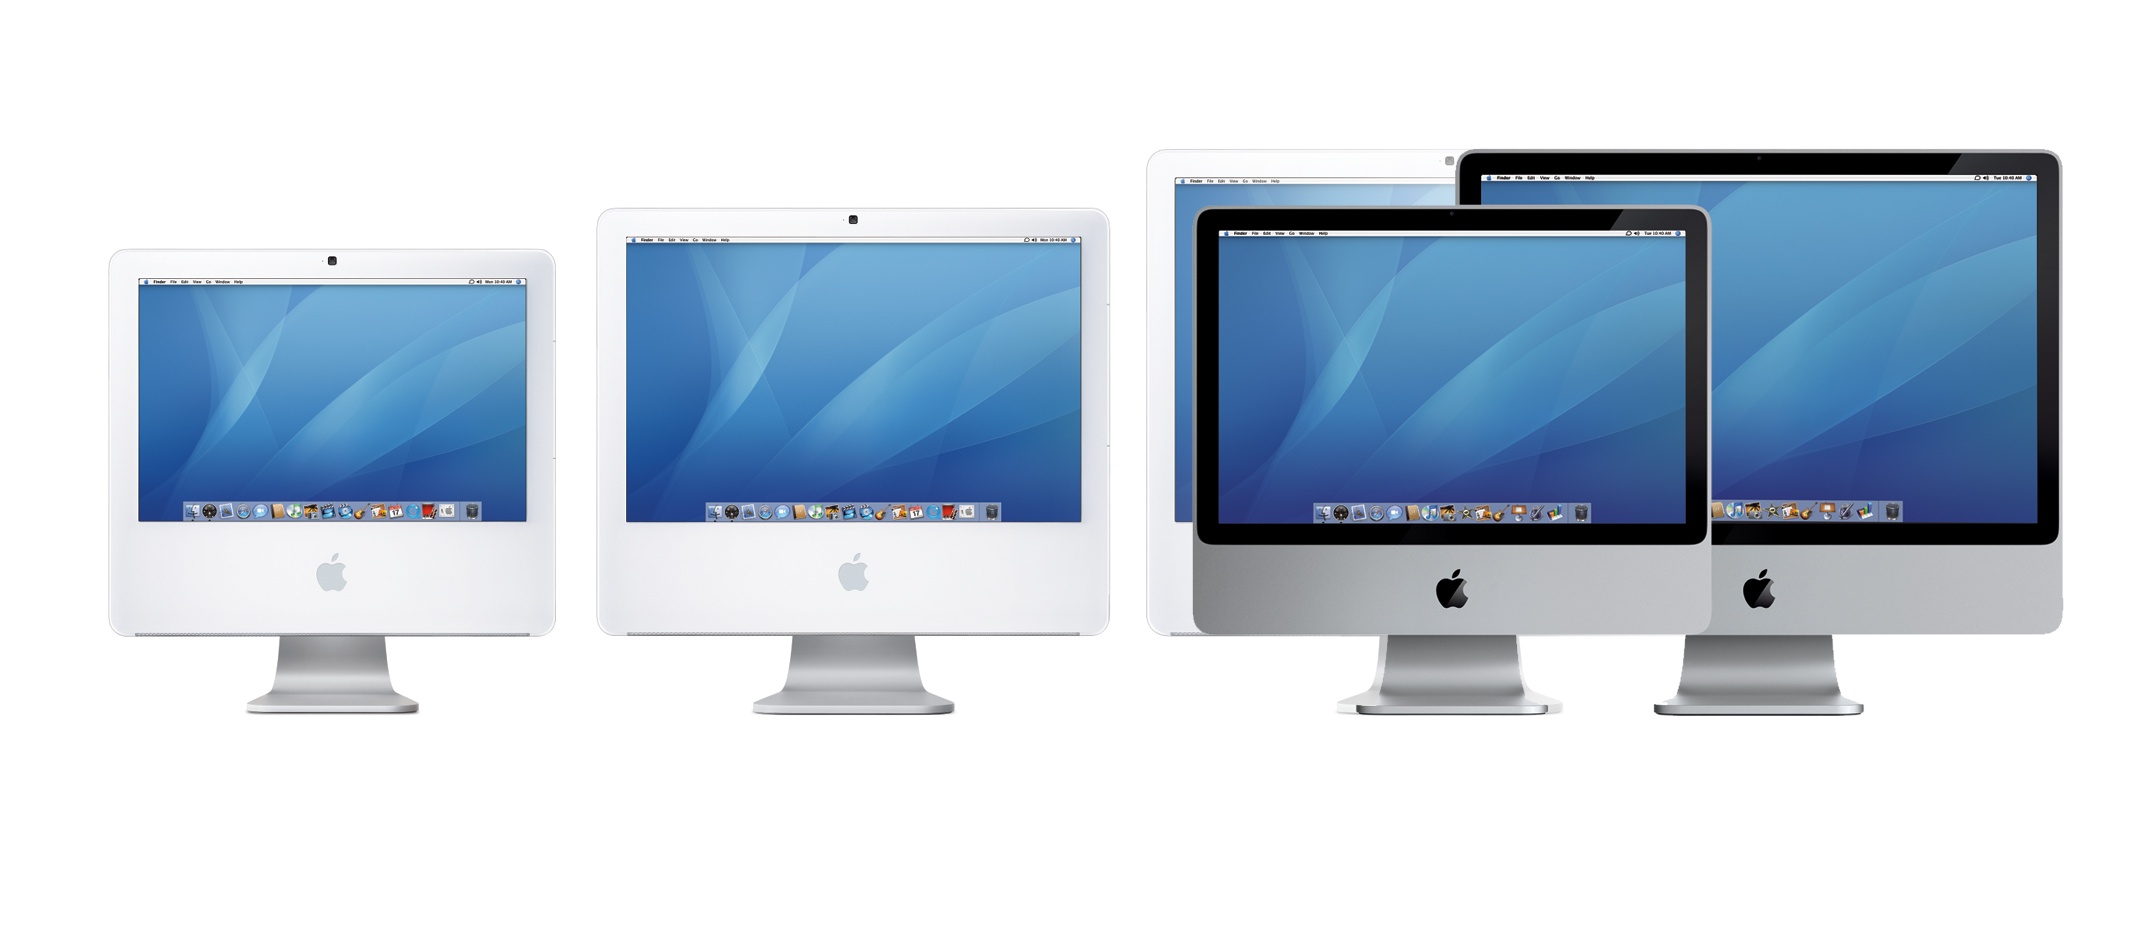 Late 2006 vs. Mid 2007 iMacs